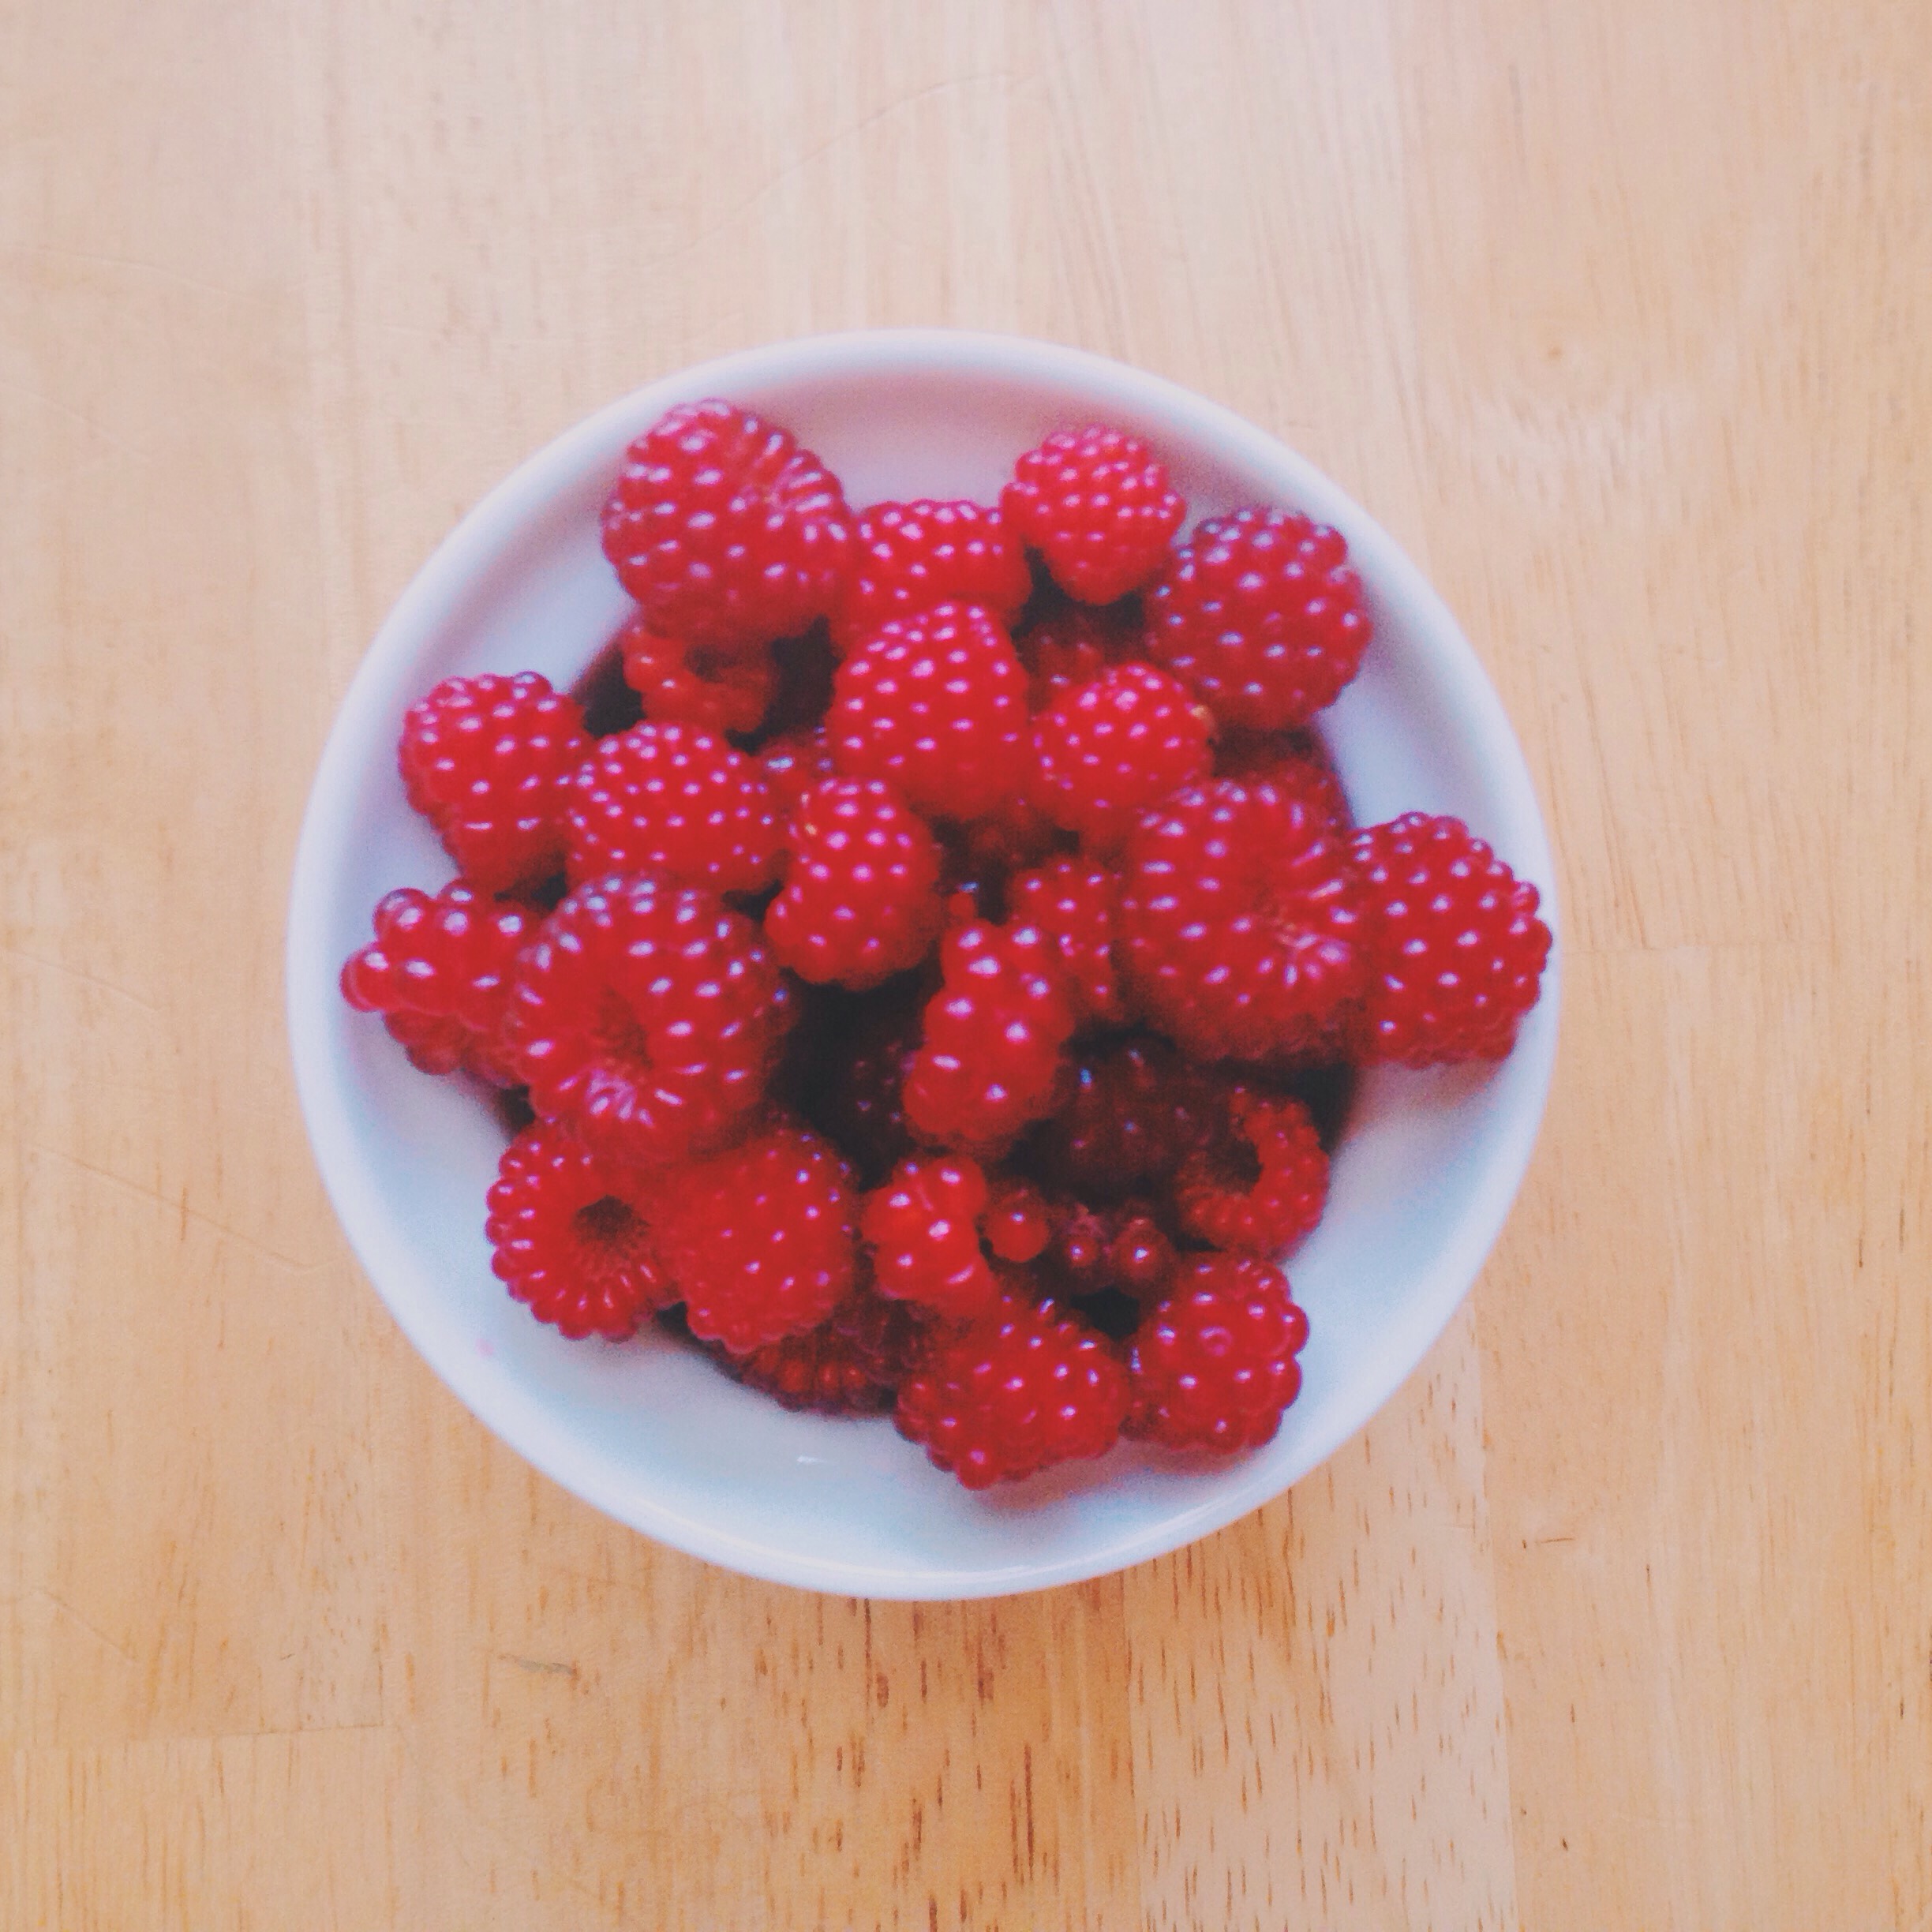 Raspberries from the backyard